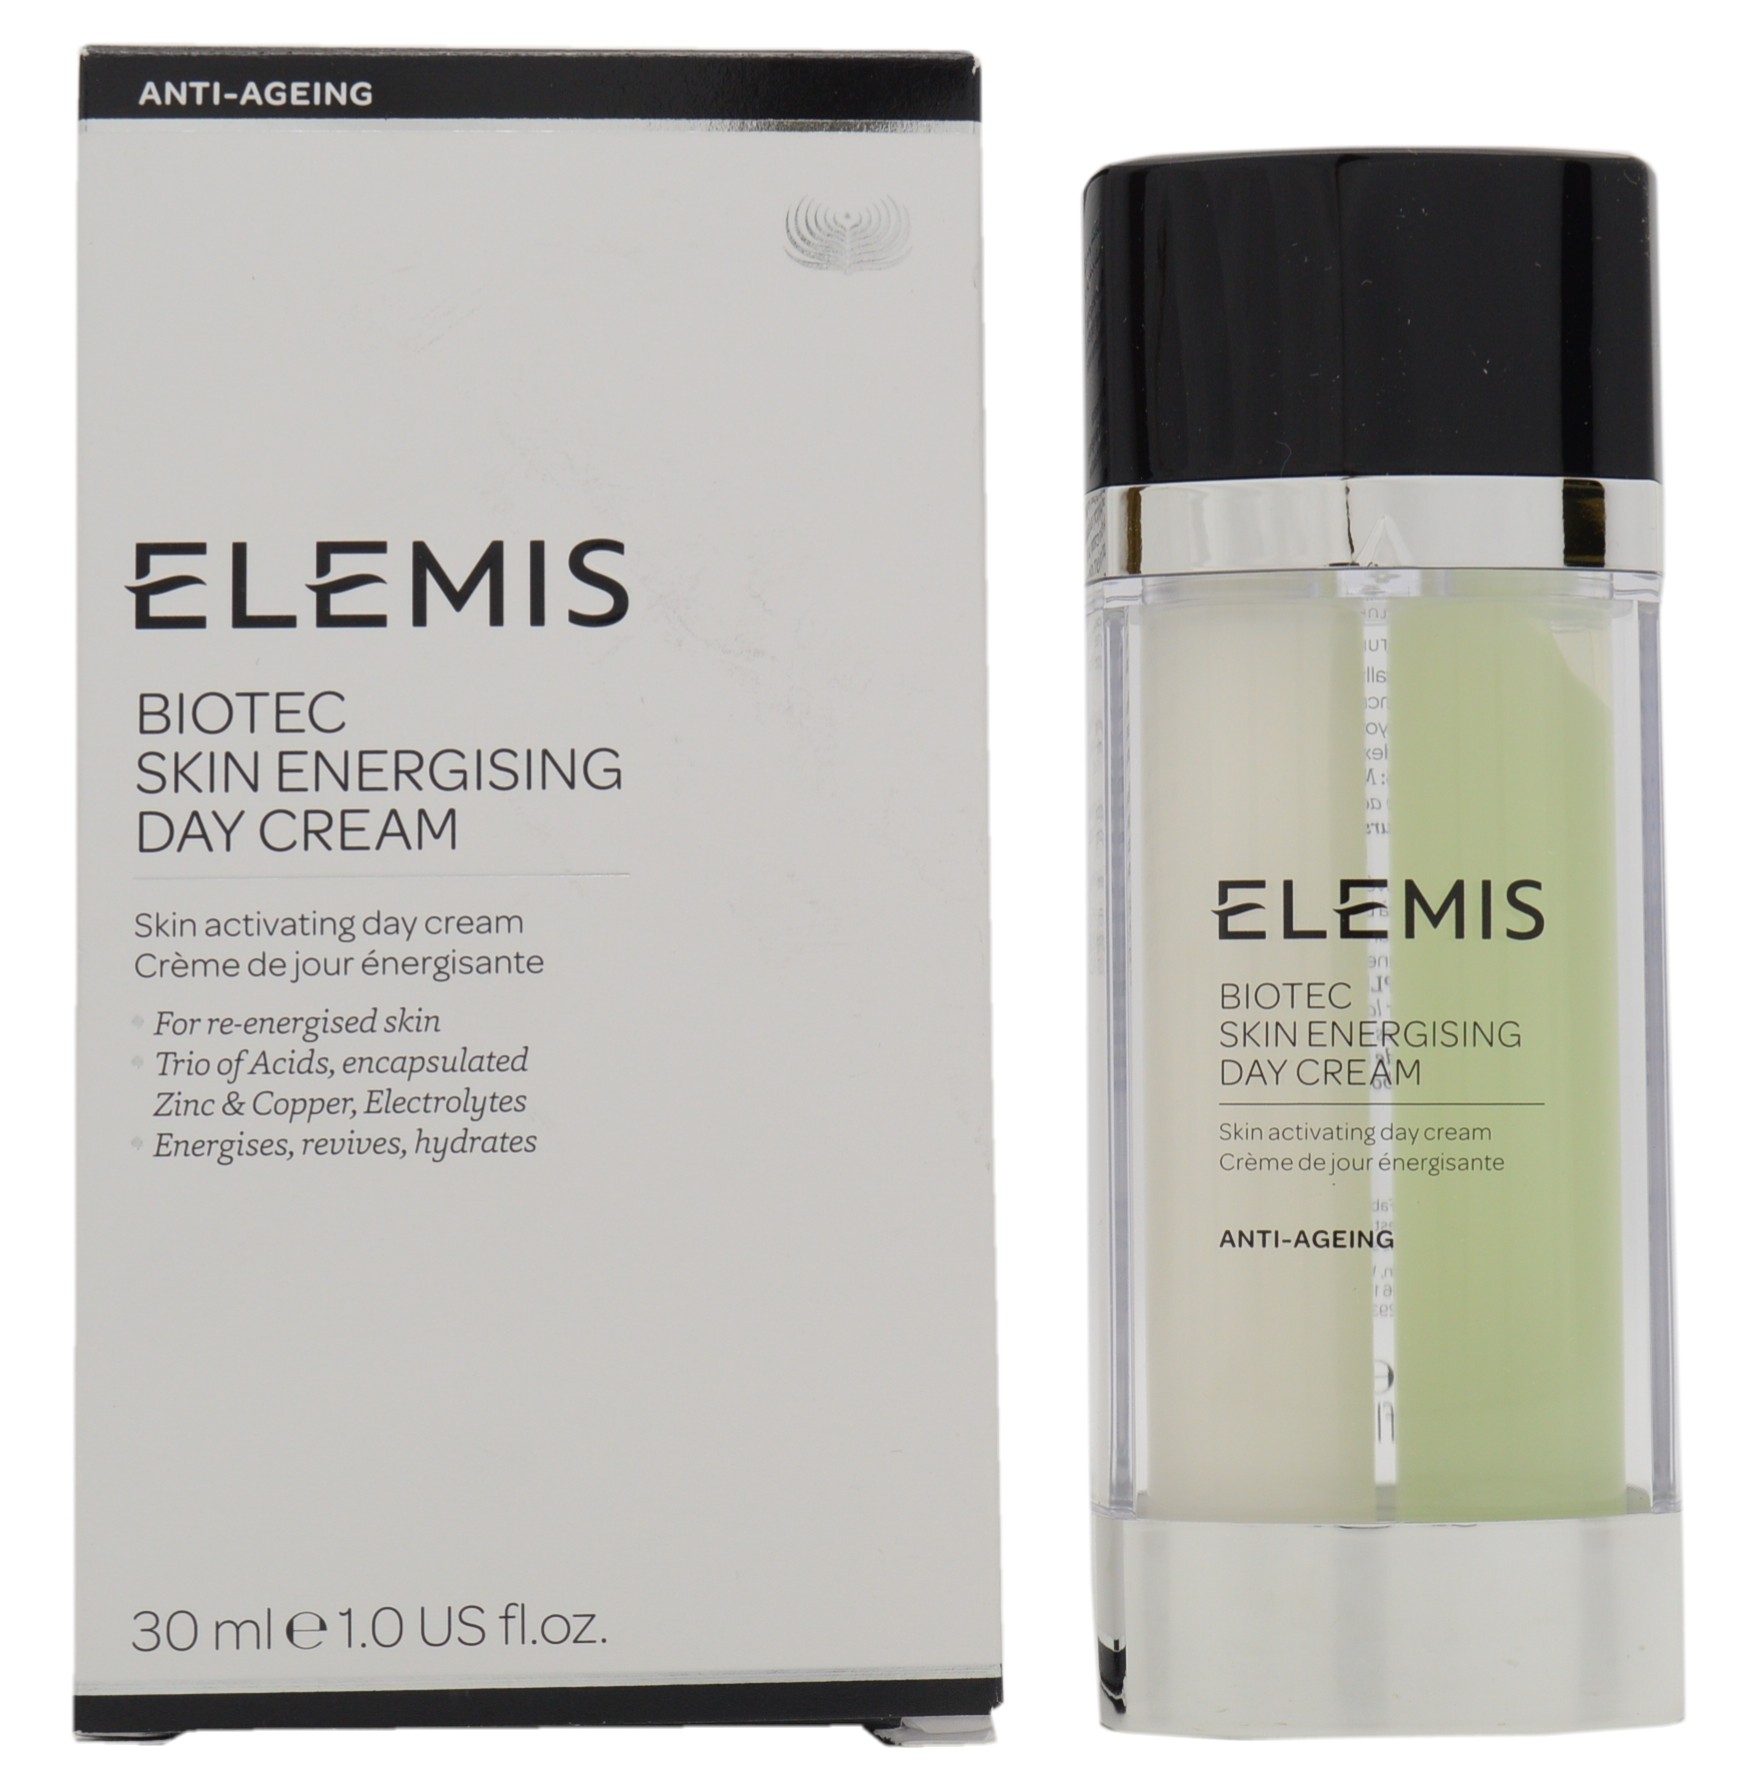 Elemis Anti-Ageing Biotec Skin Energising